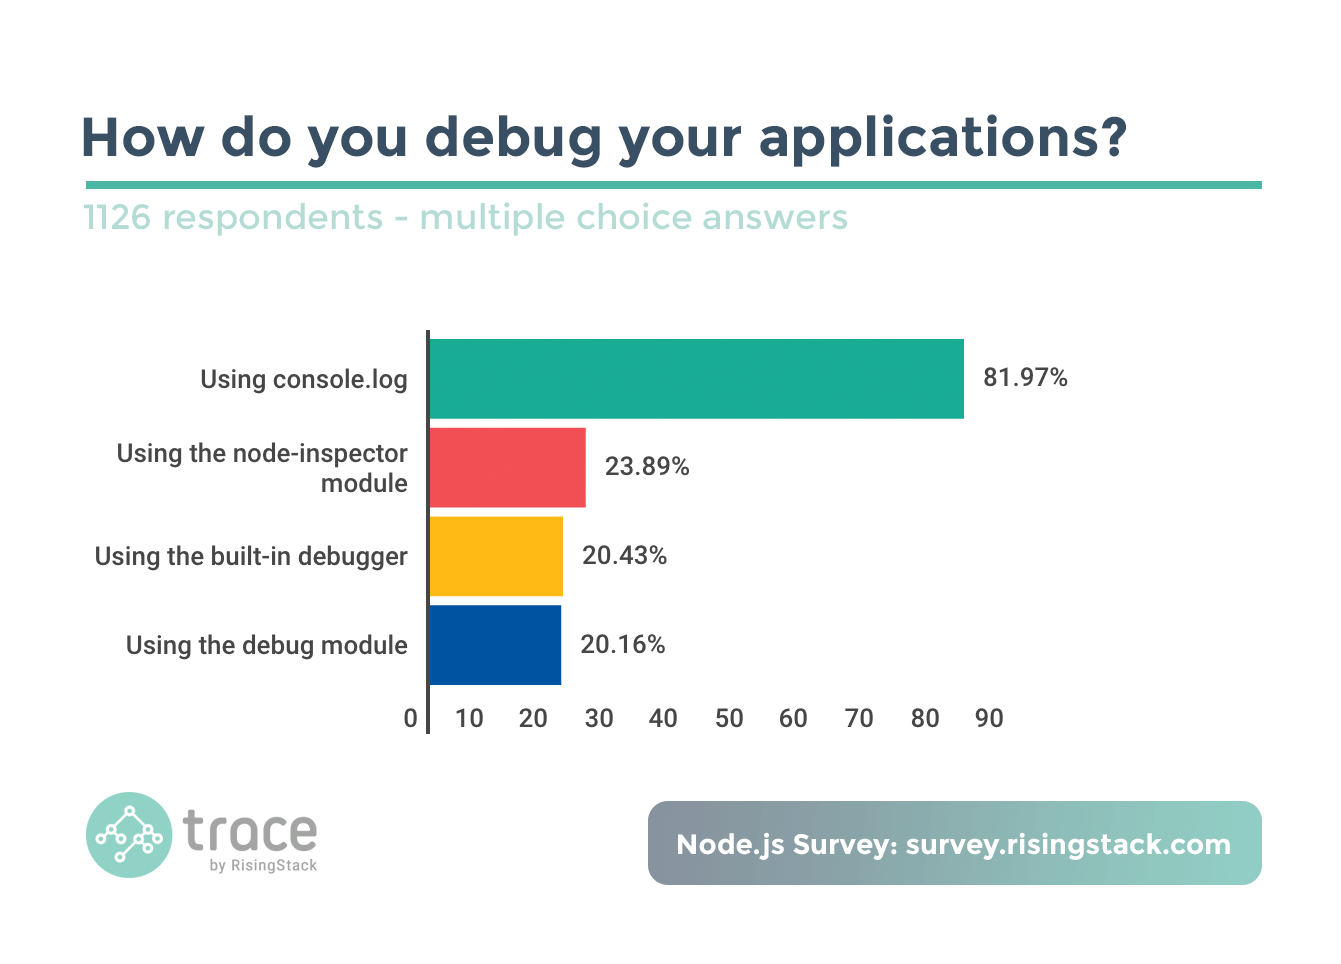 Node.js Survey - How do you debug your applications? Using the console.log